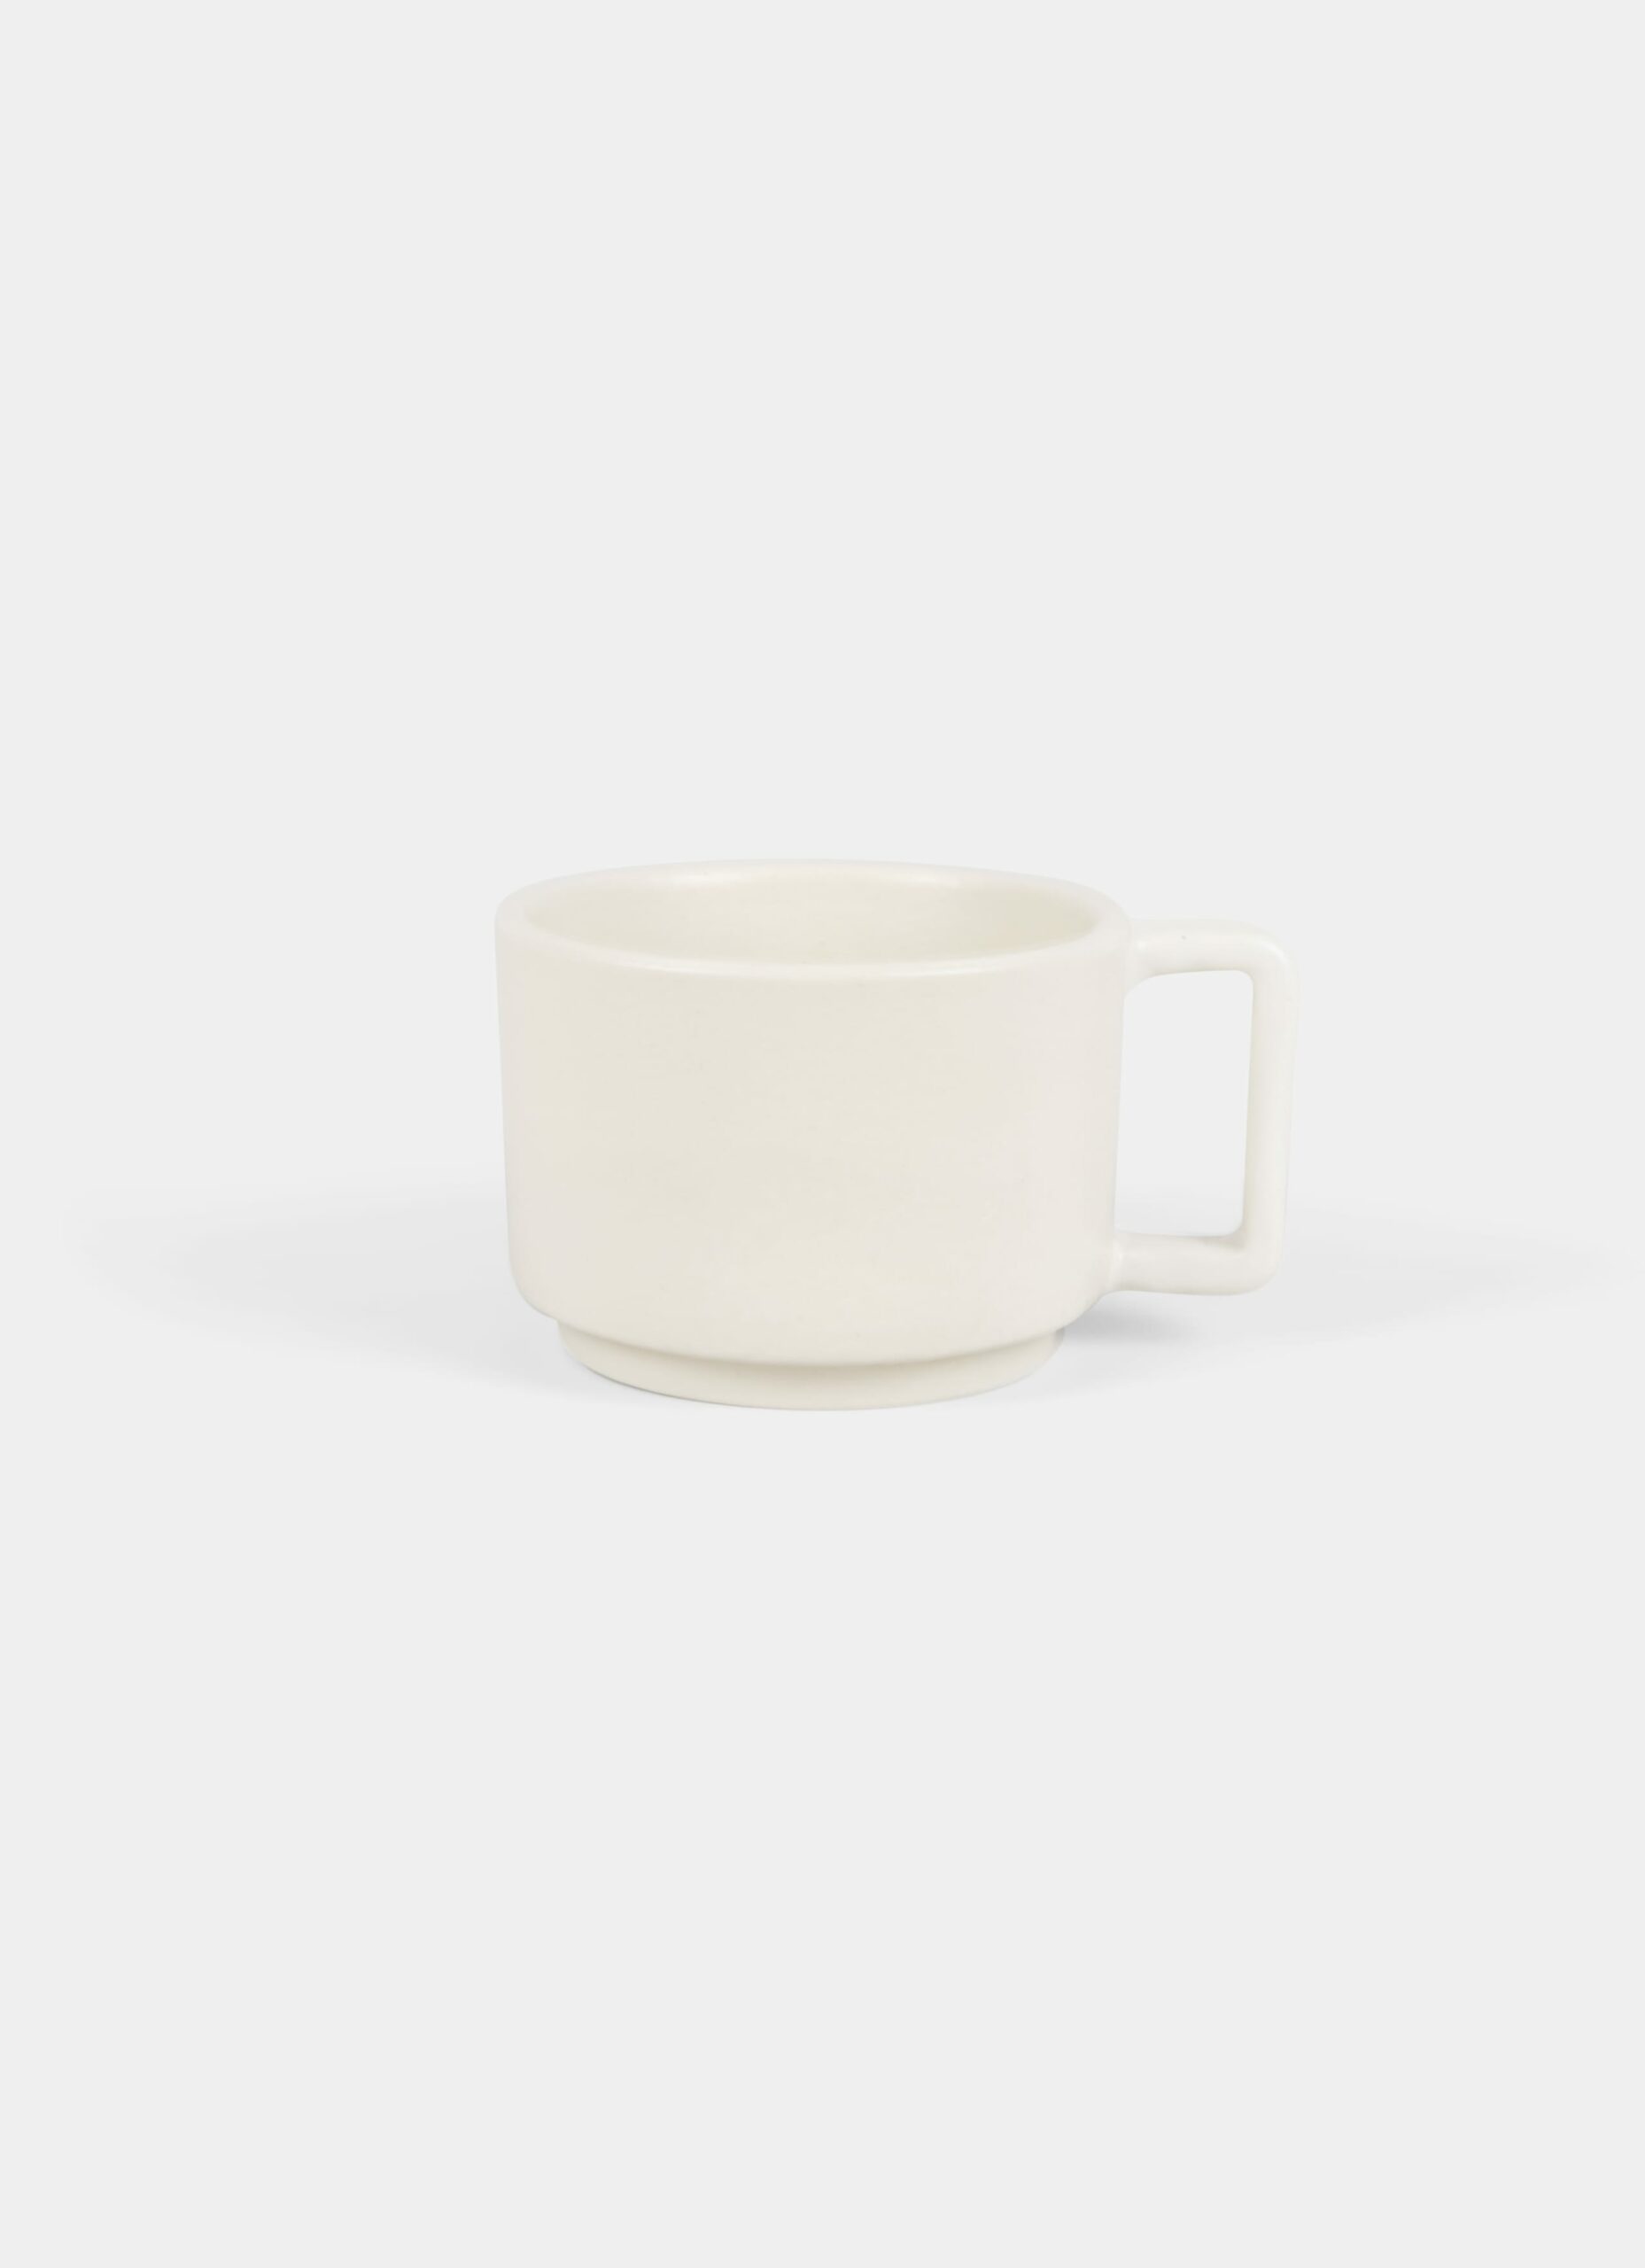 Frama - Otto Stoneware Low Mug with Handle - Natural